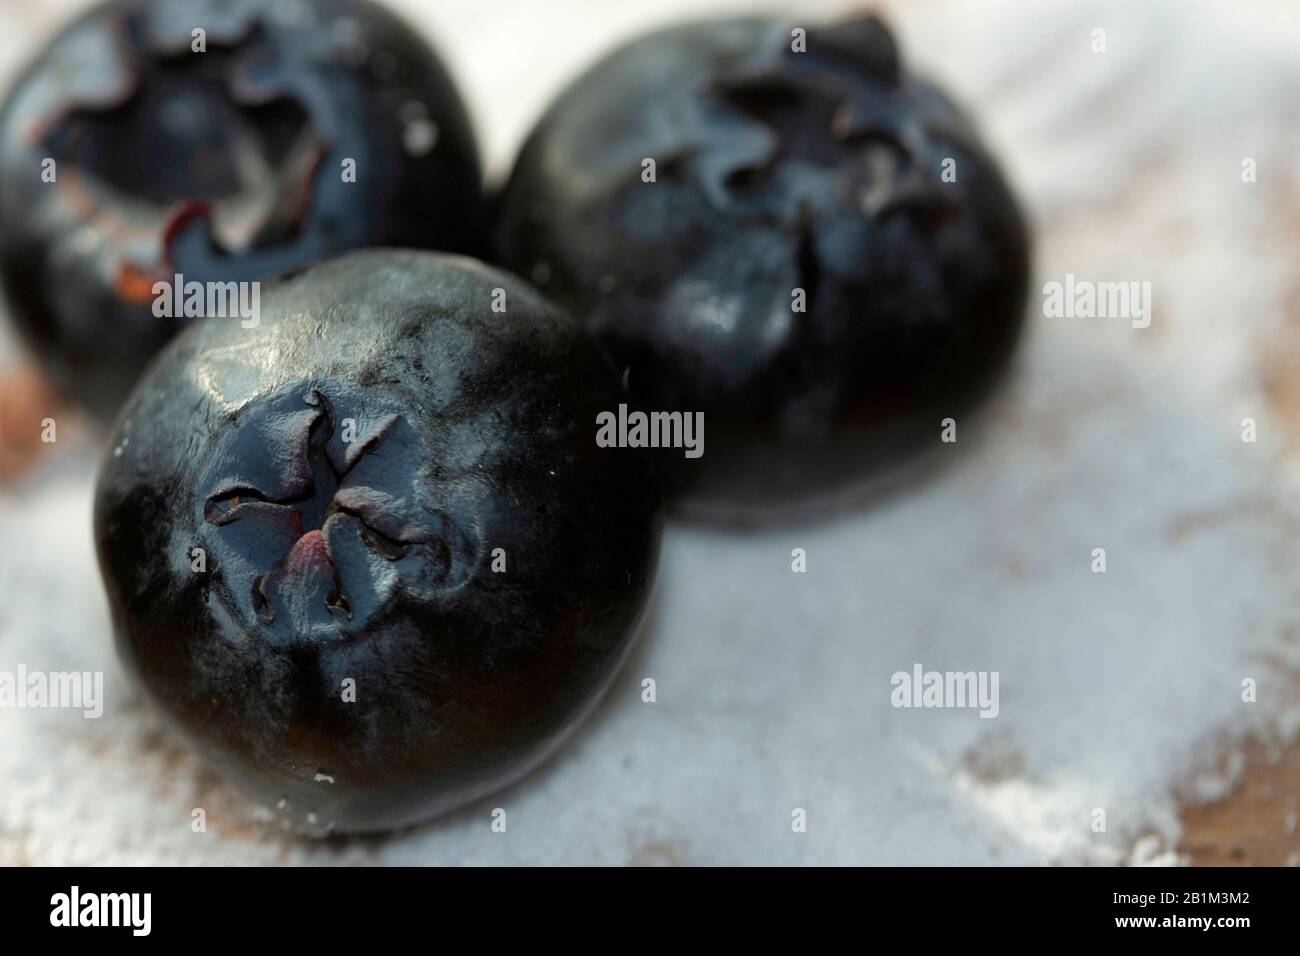 https://c8.alamy.com/comp/2B1M3M2/juicy-blueberries-jumbo-macro-on-sugar-free-aspartame-bed-on-wood-2B1M3M2.jpg